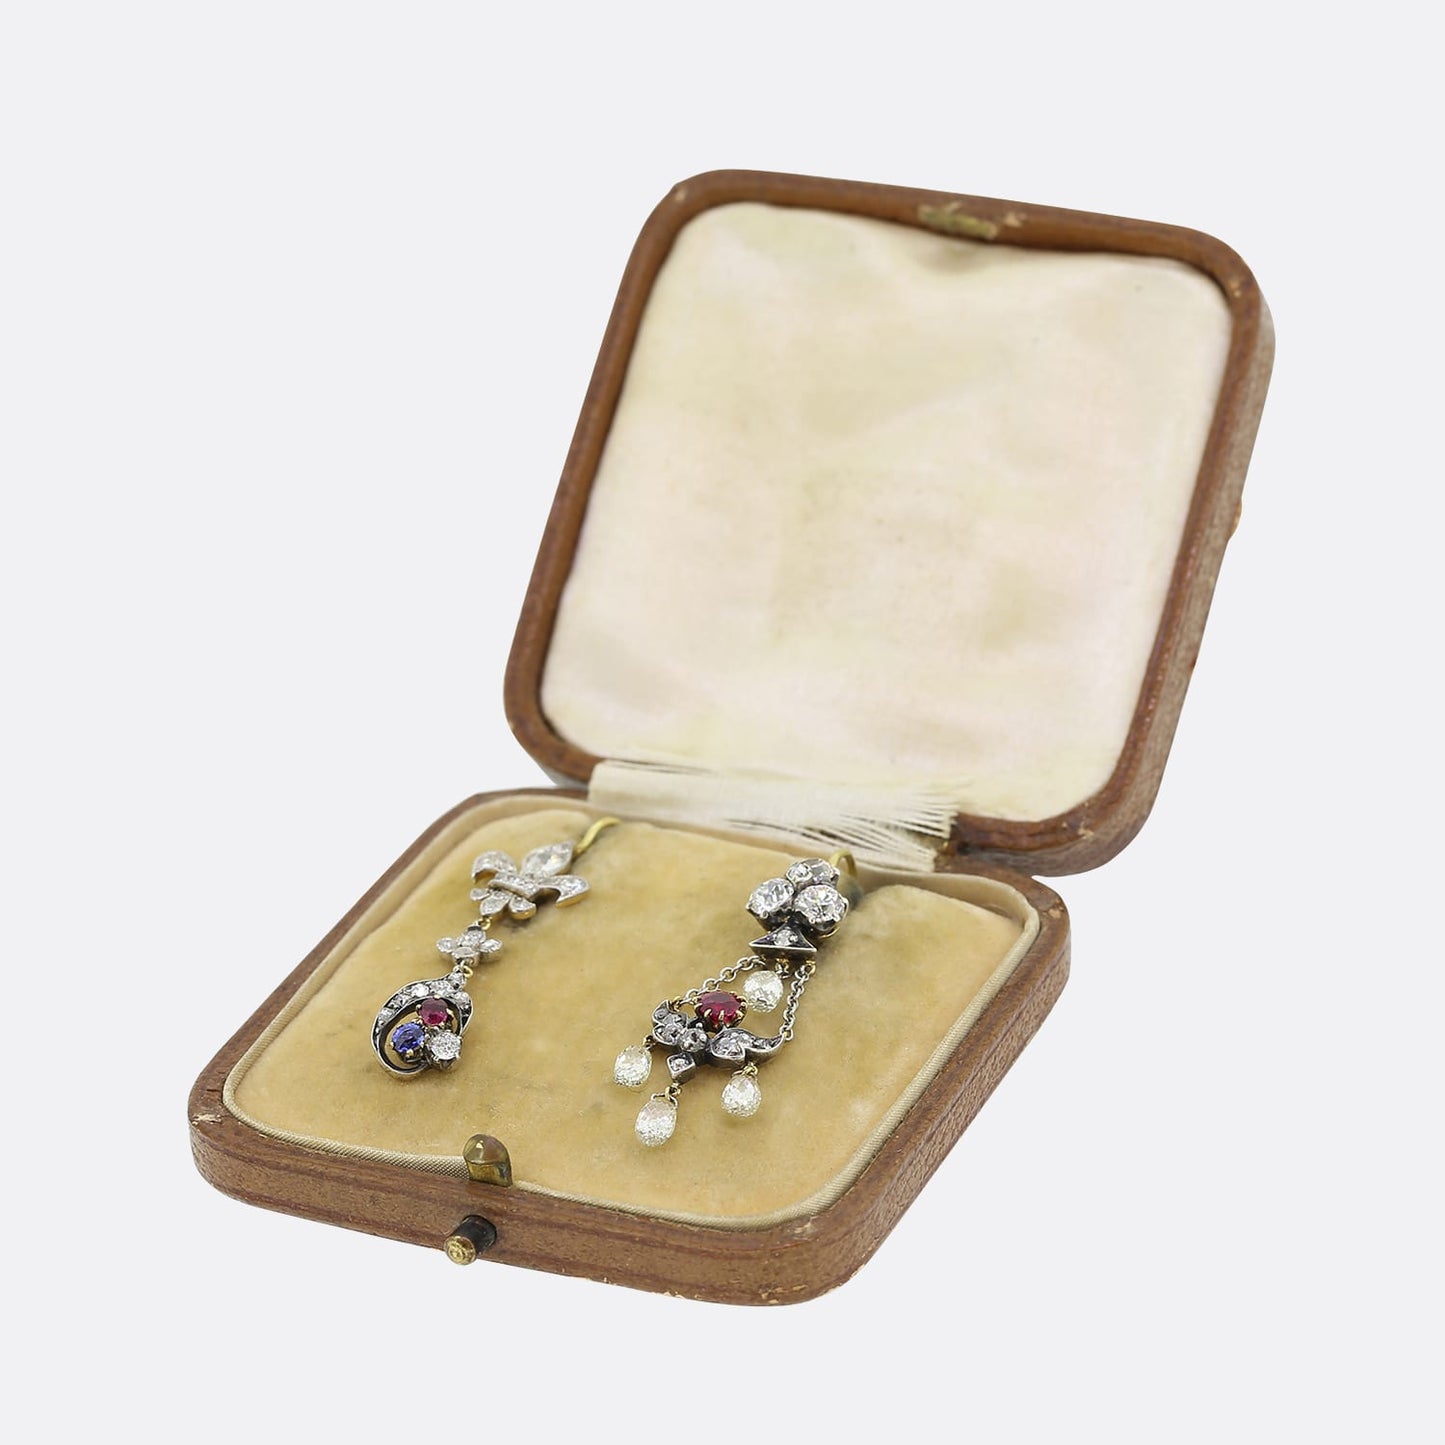 Victorian Clover and Fleur-De-Lis Diamond Drop Earrings